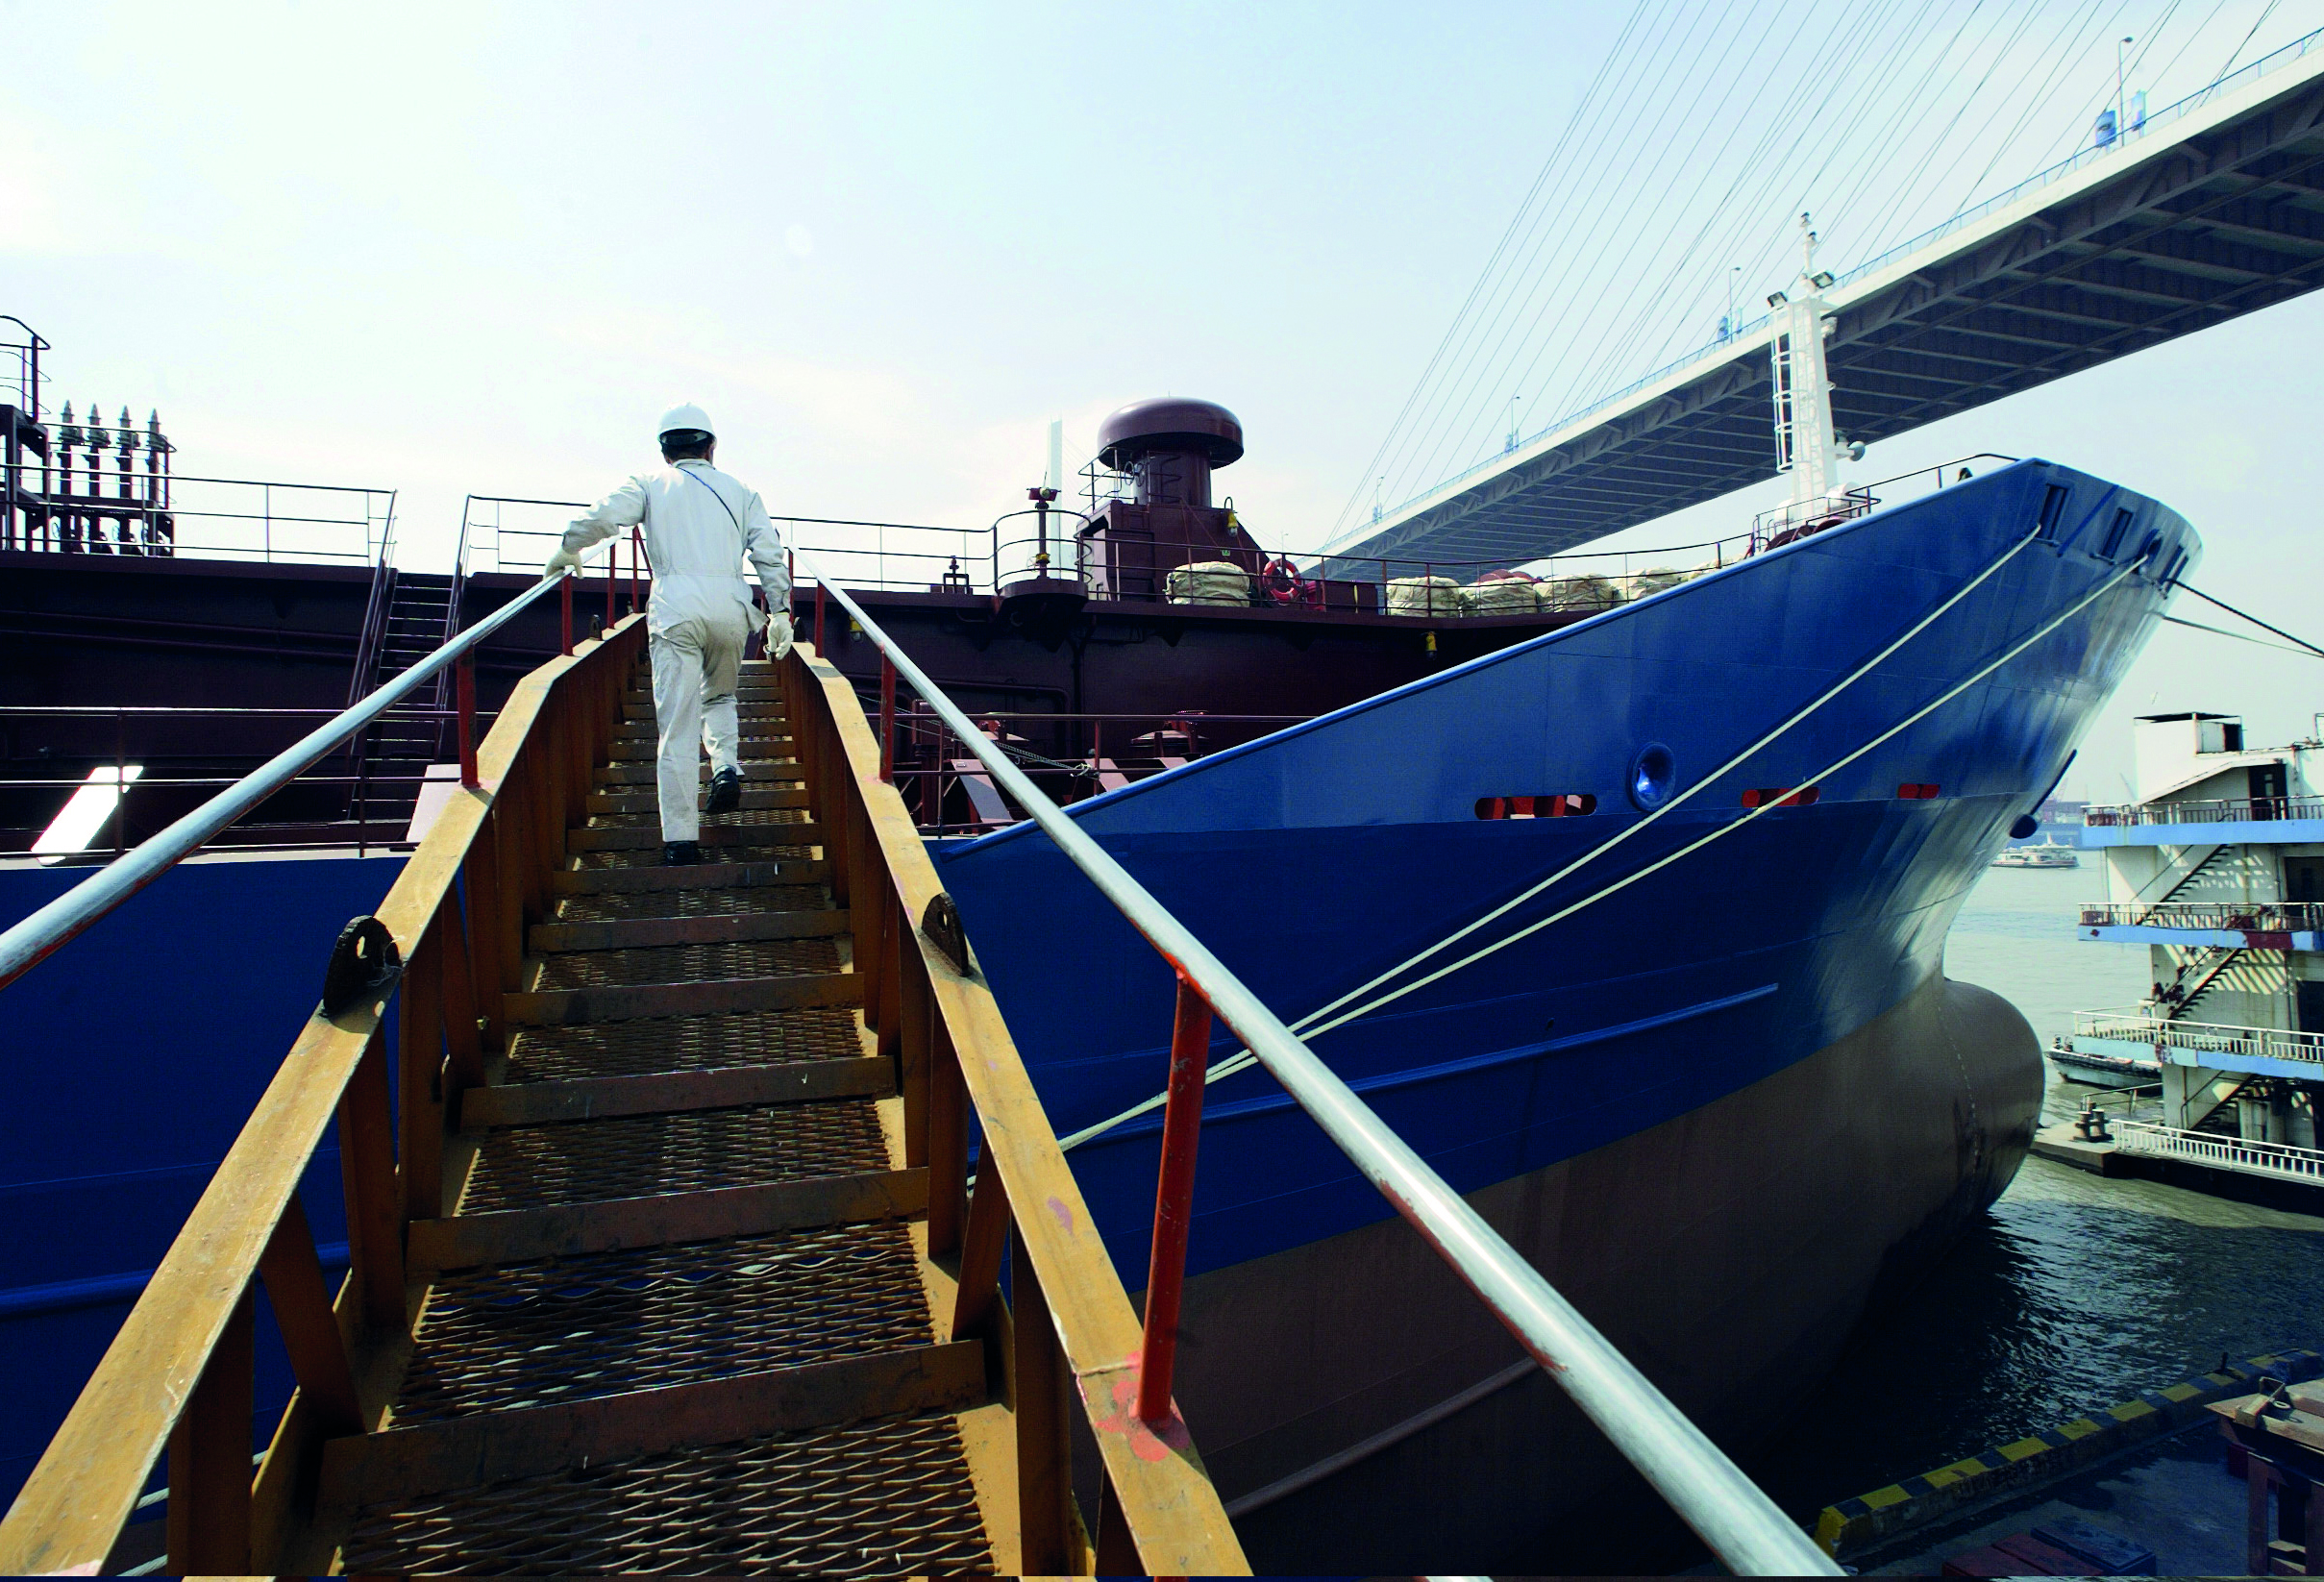 Ship - surveyor entering vessel